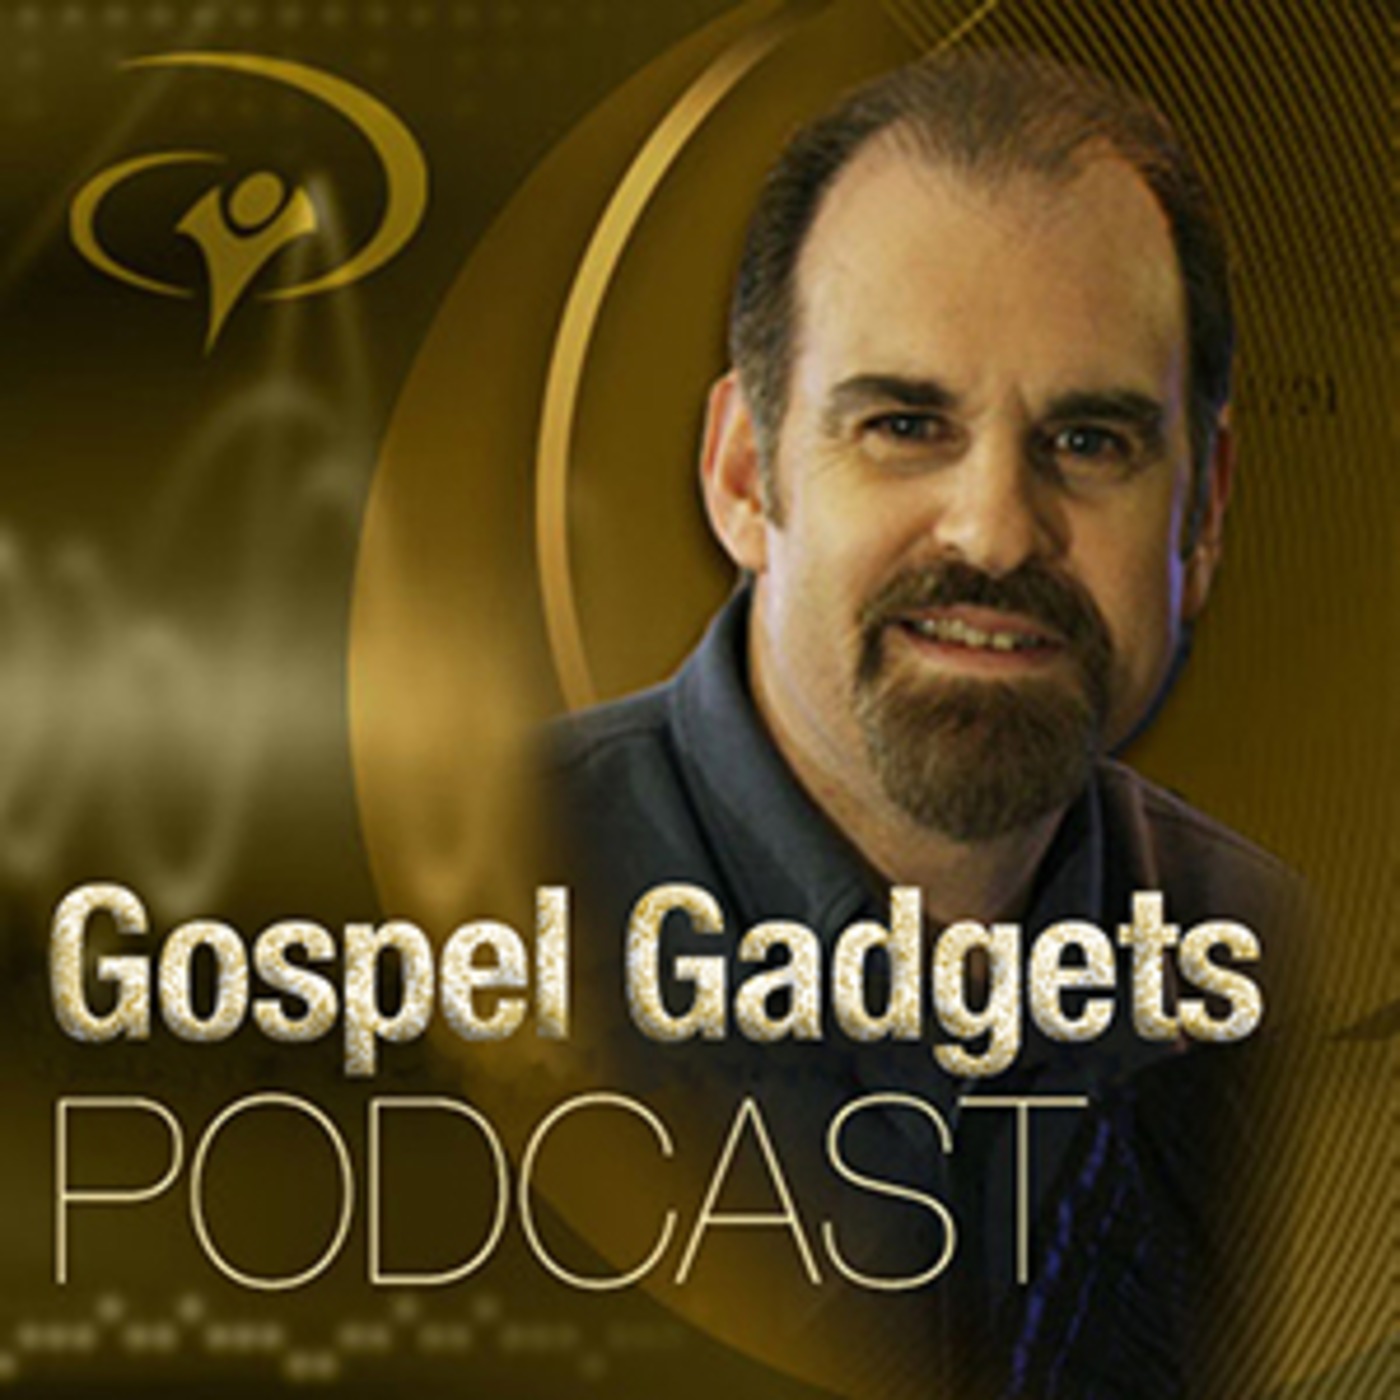 Episode 80: Gospel Gadget Podcast Epi#80 - Smartphone Filmmaking in Tanzania